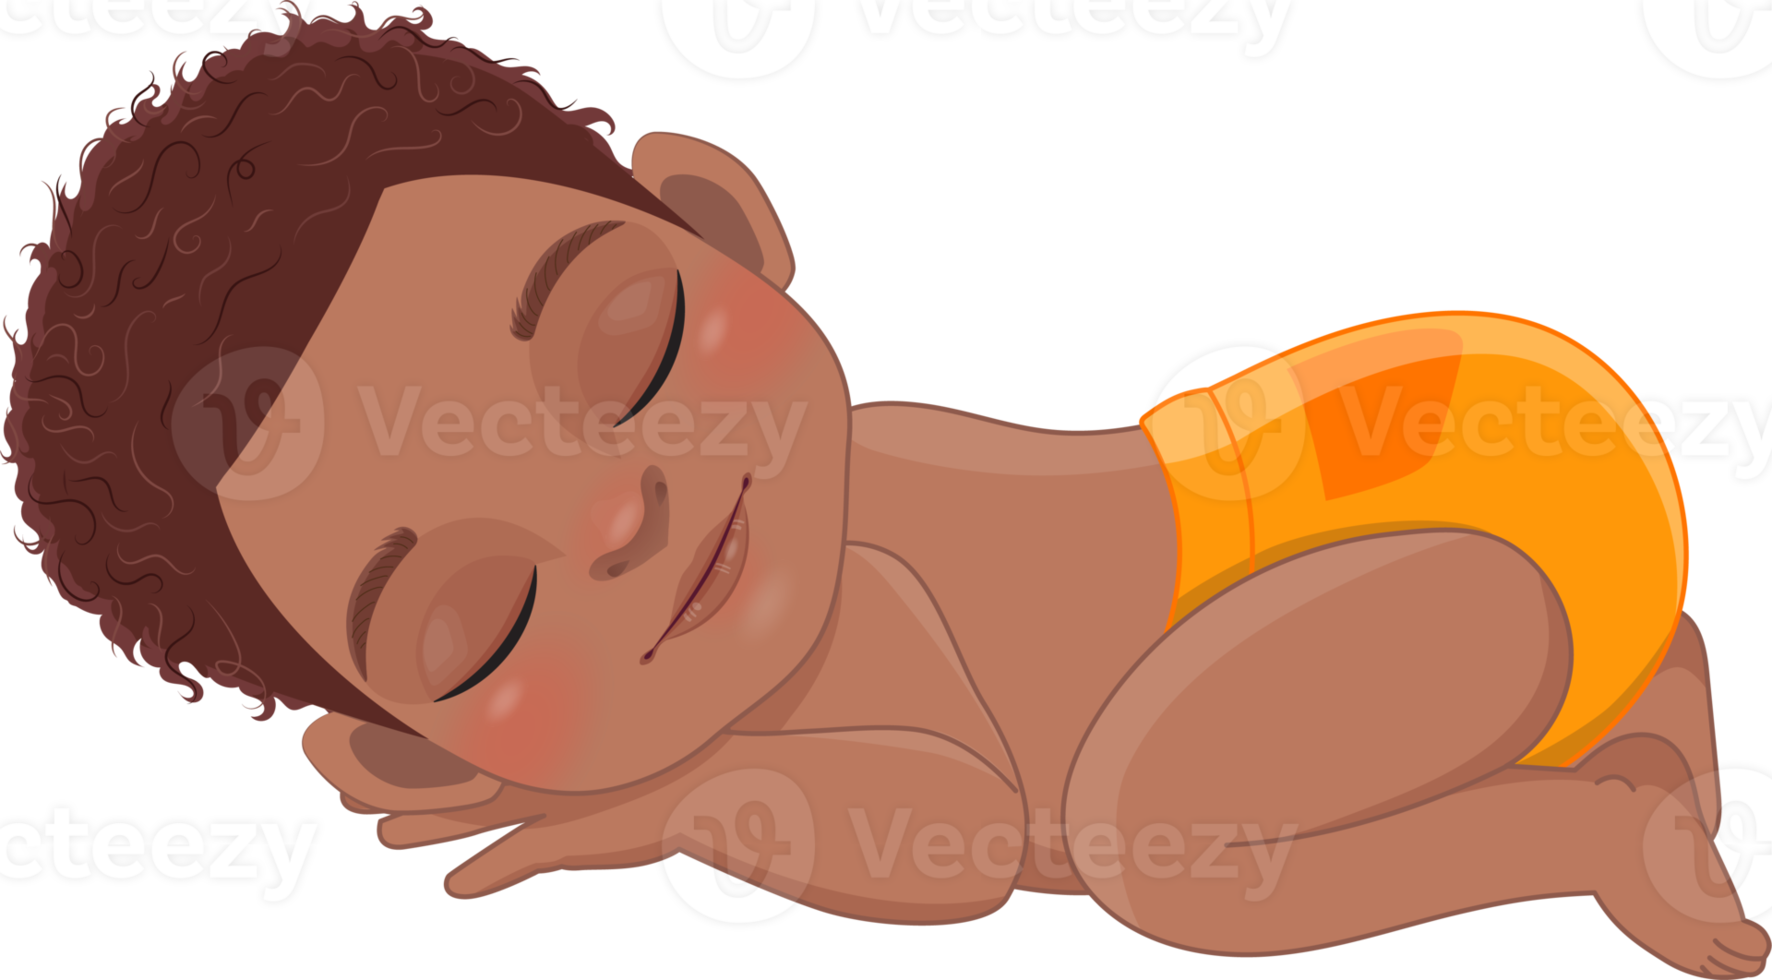 Cartoon character sleeping black baby boy wearing orange ruffled diaper cartoon png